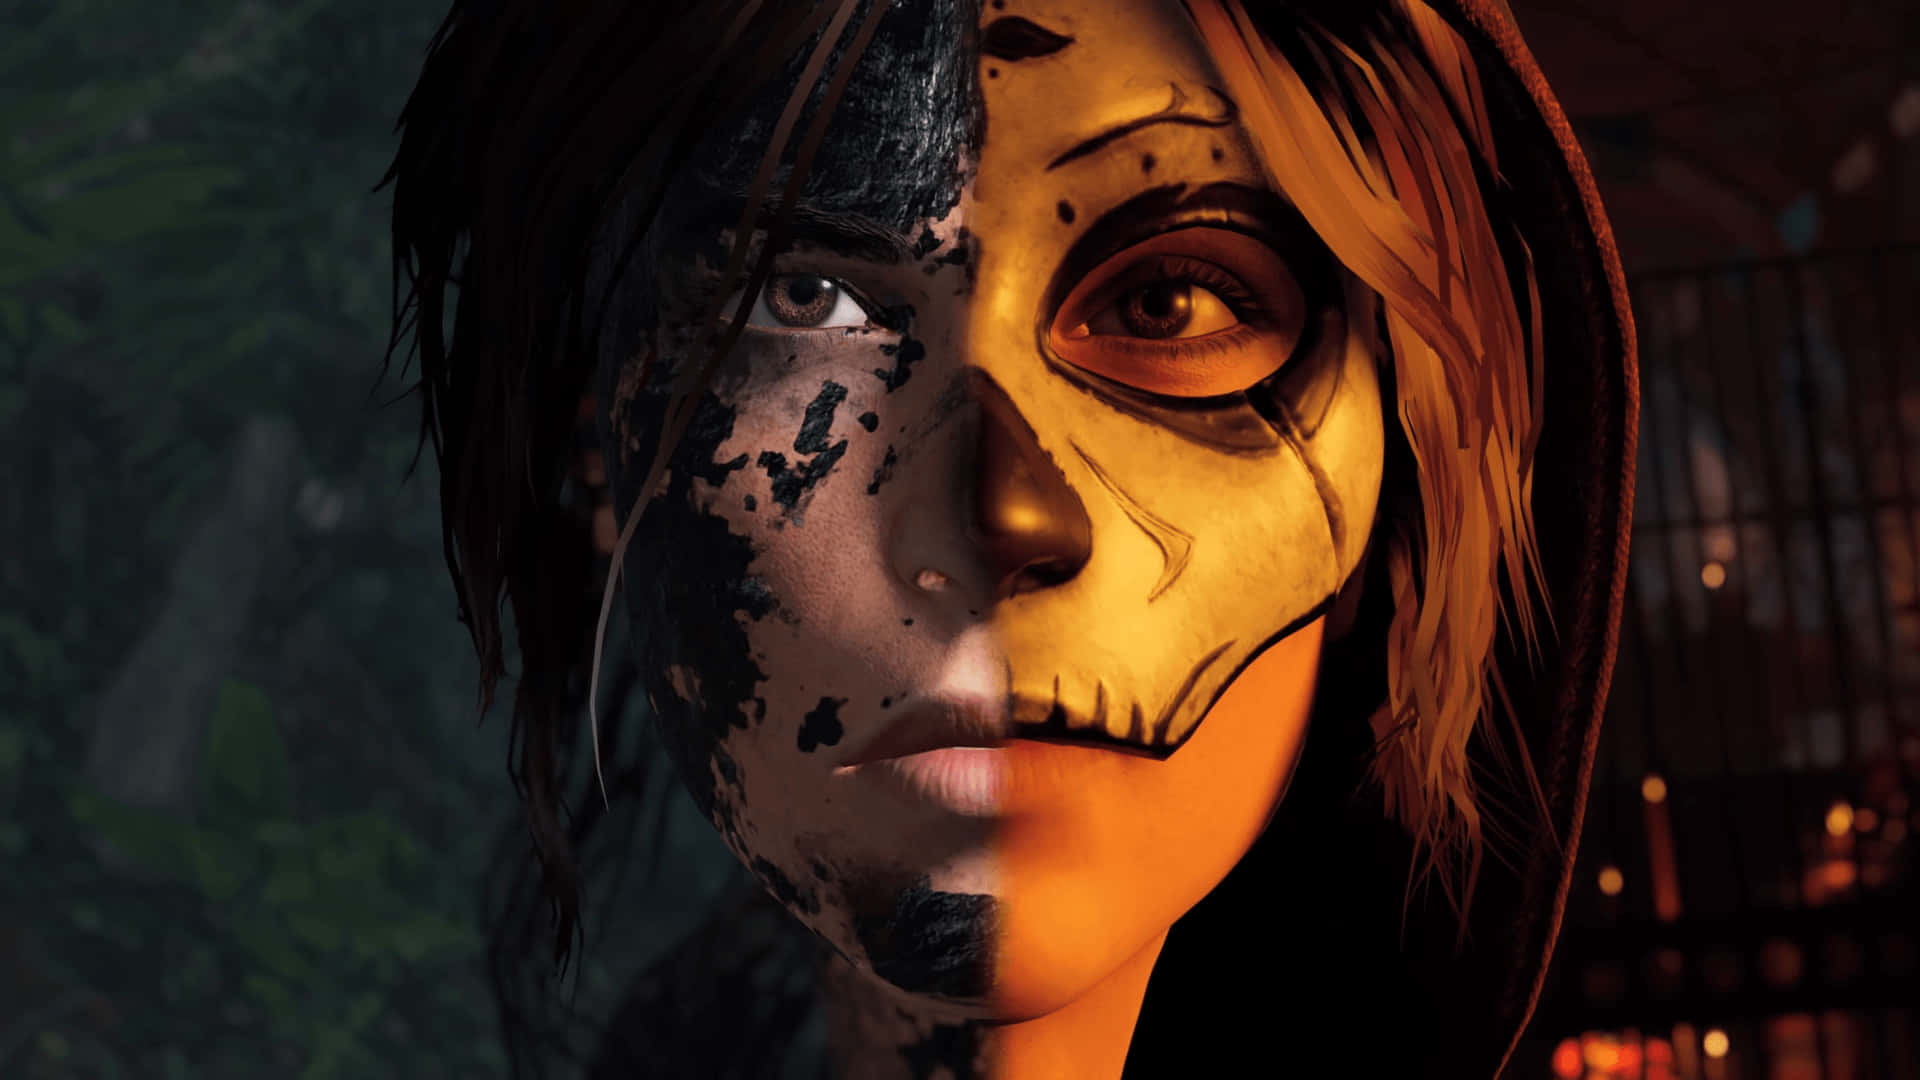 Få en personlig tur gennem Tomb Raider spillet ‘Shadow of the Tomb Raider’ sammen med Lara Croft.